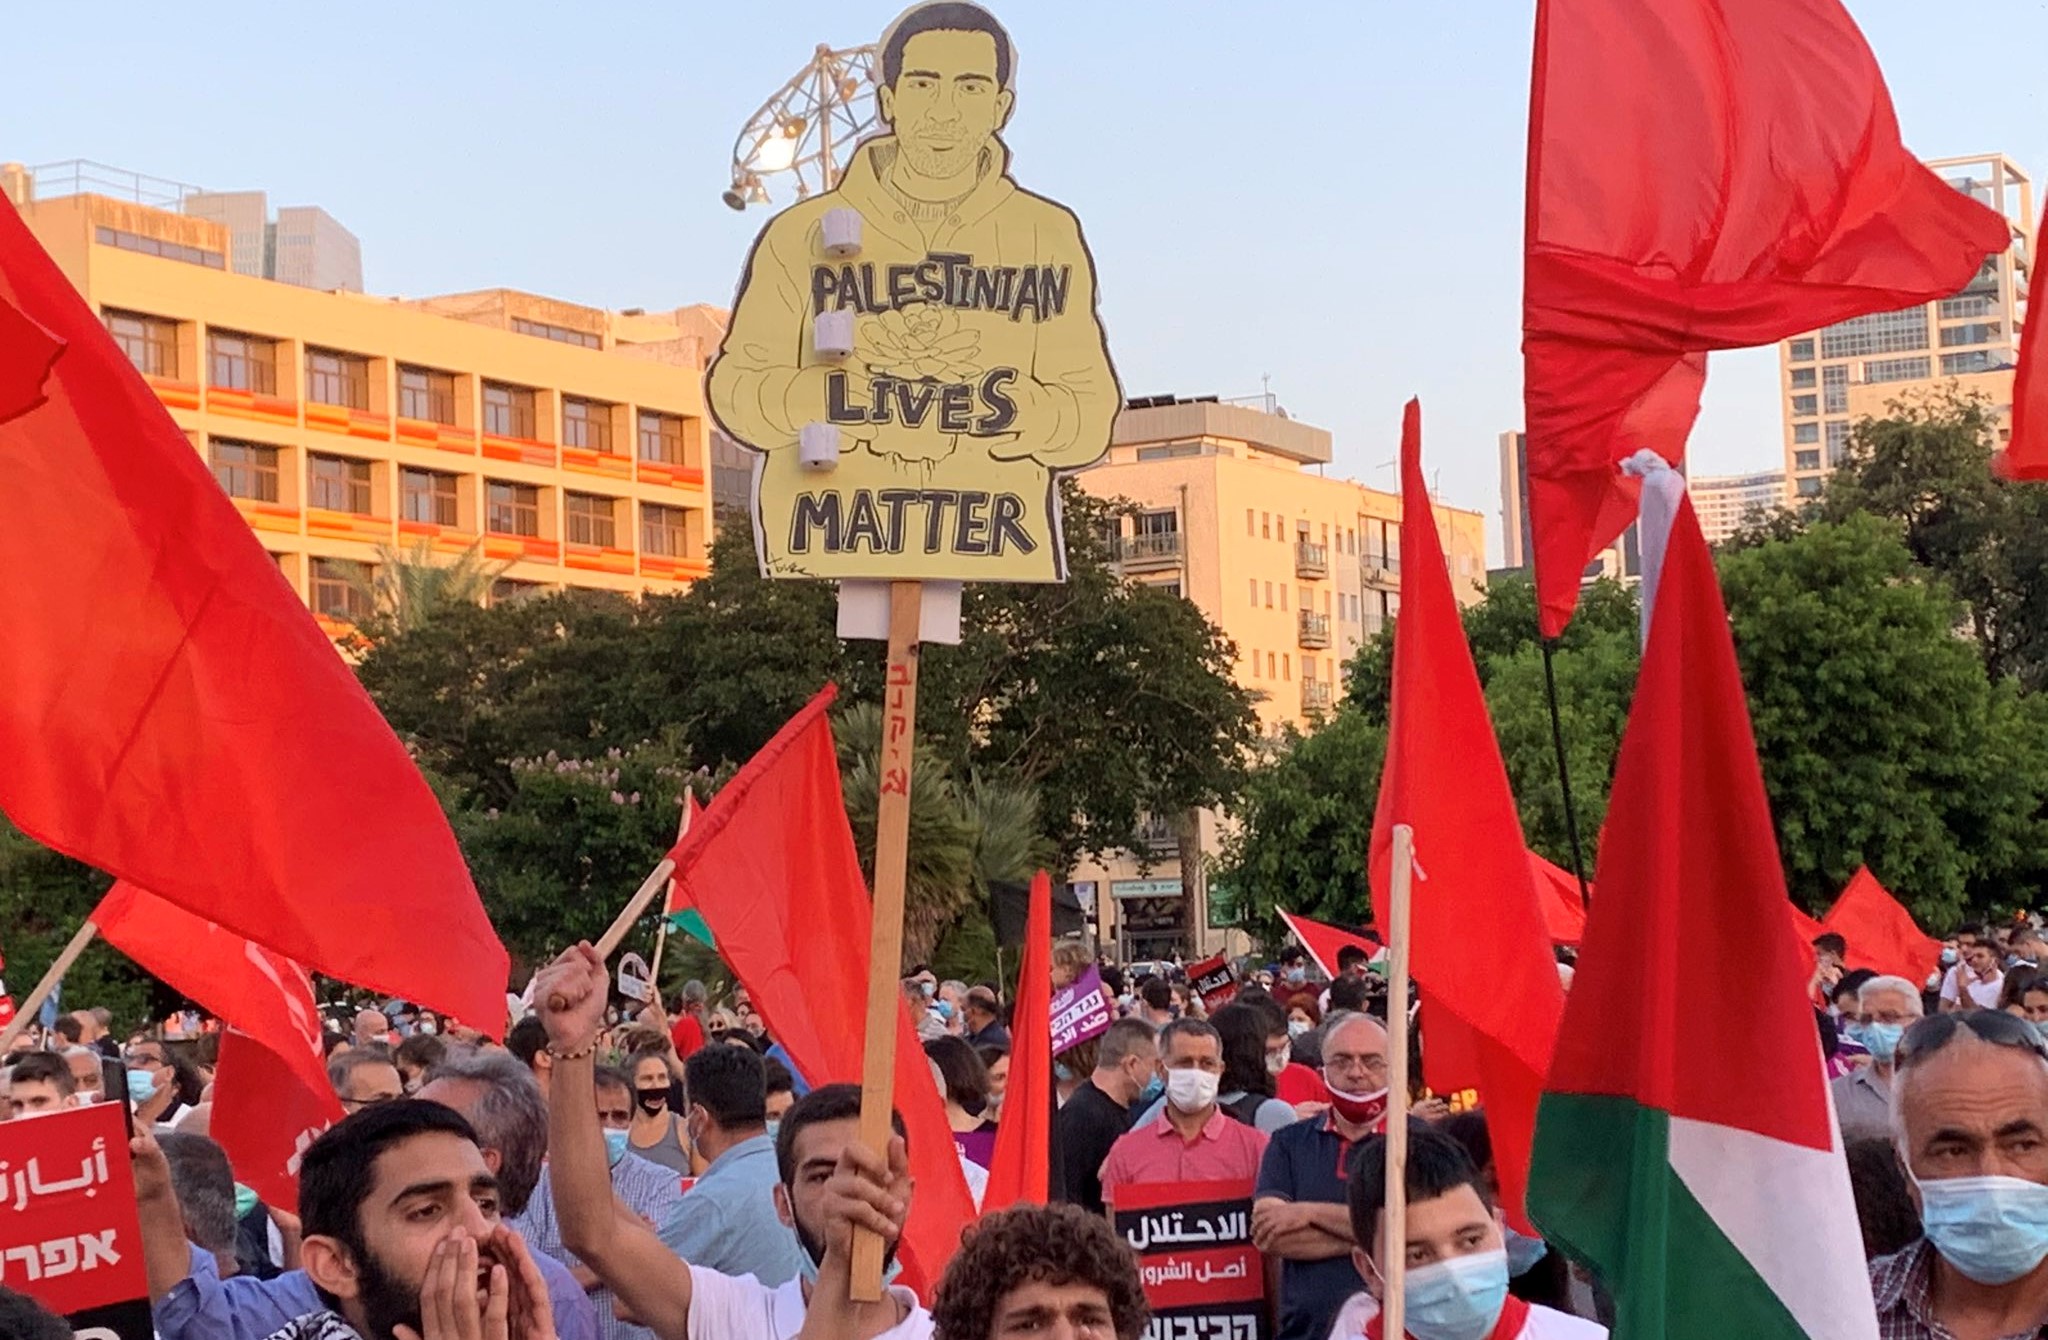 Demonstrators in Rabin Square, Saturday evening, June 6: "Palestinian lives matter"